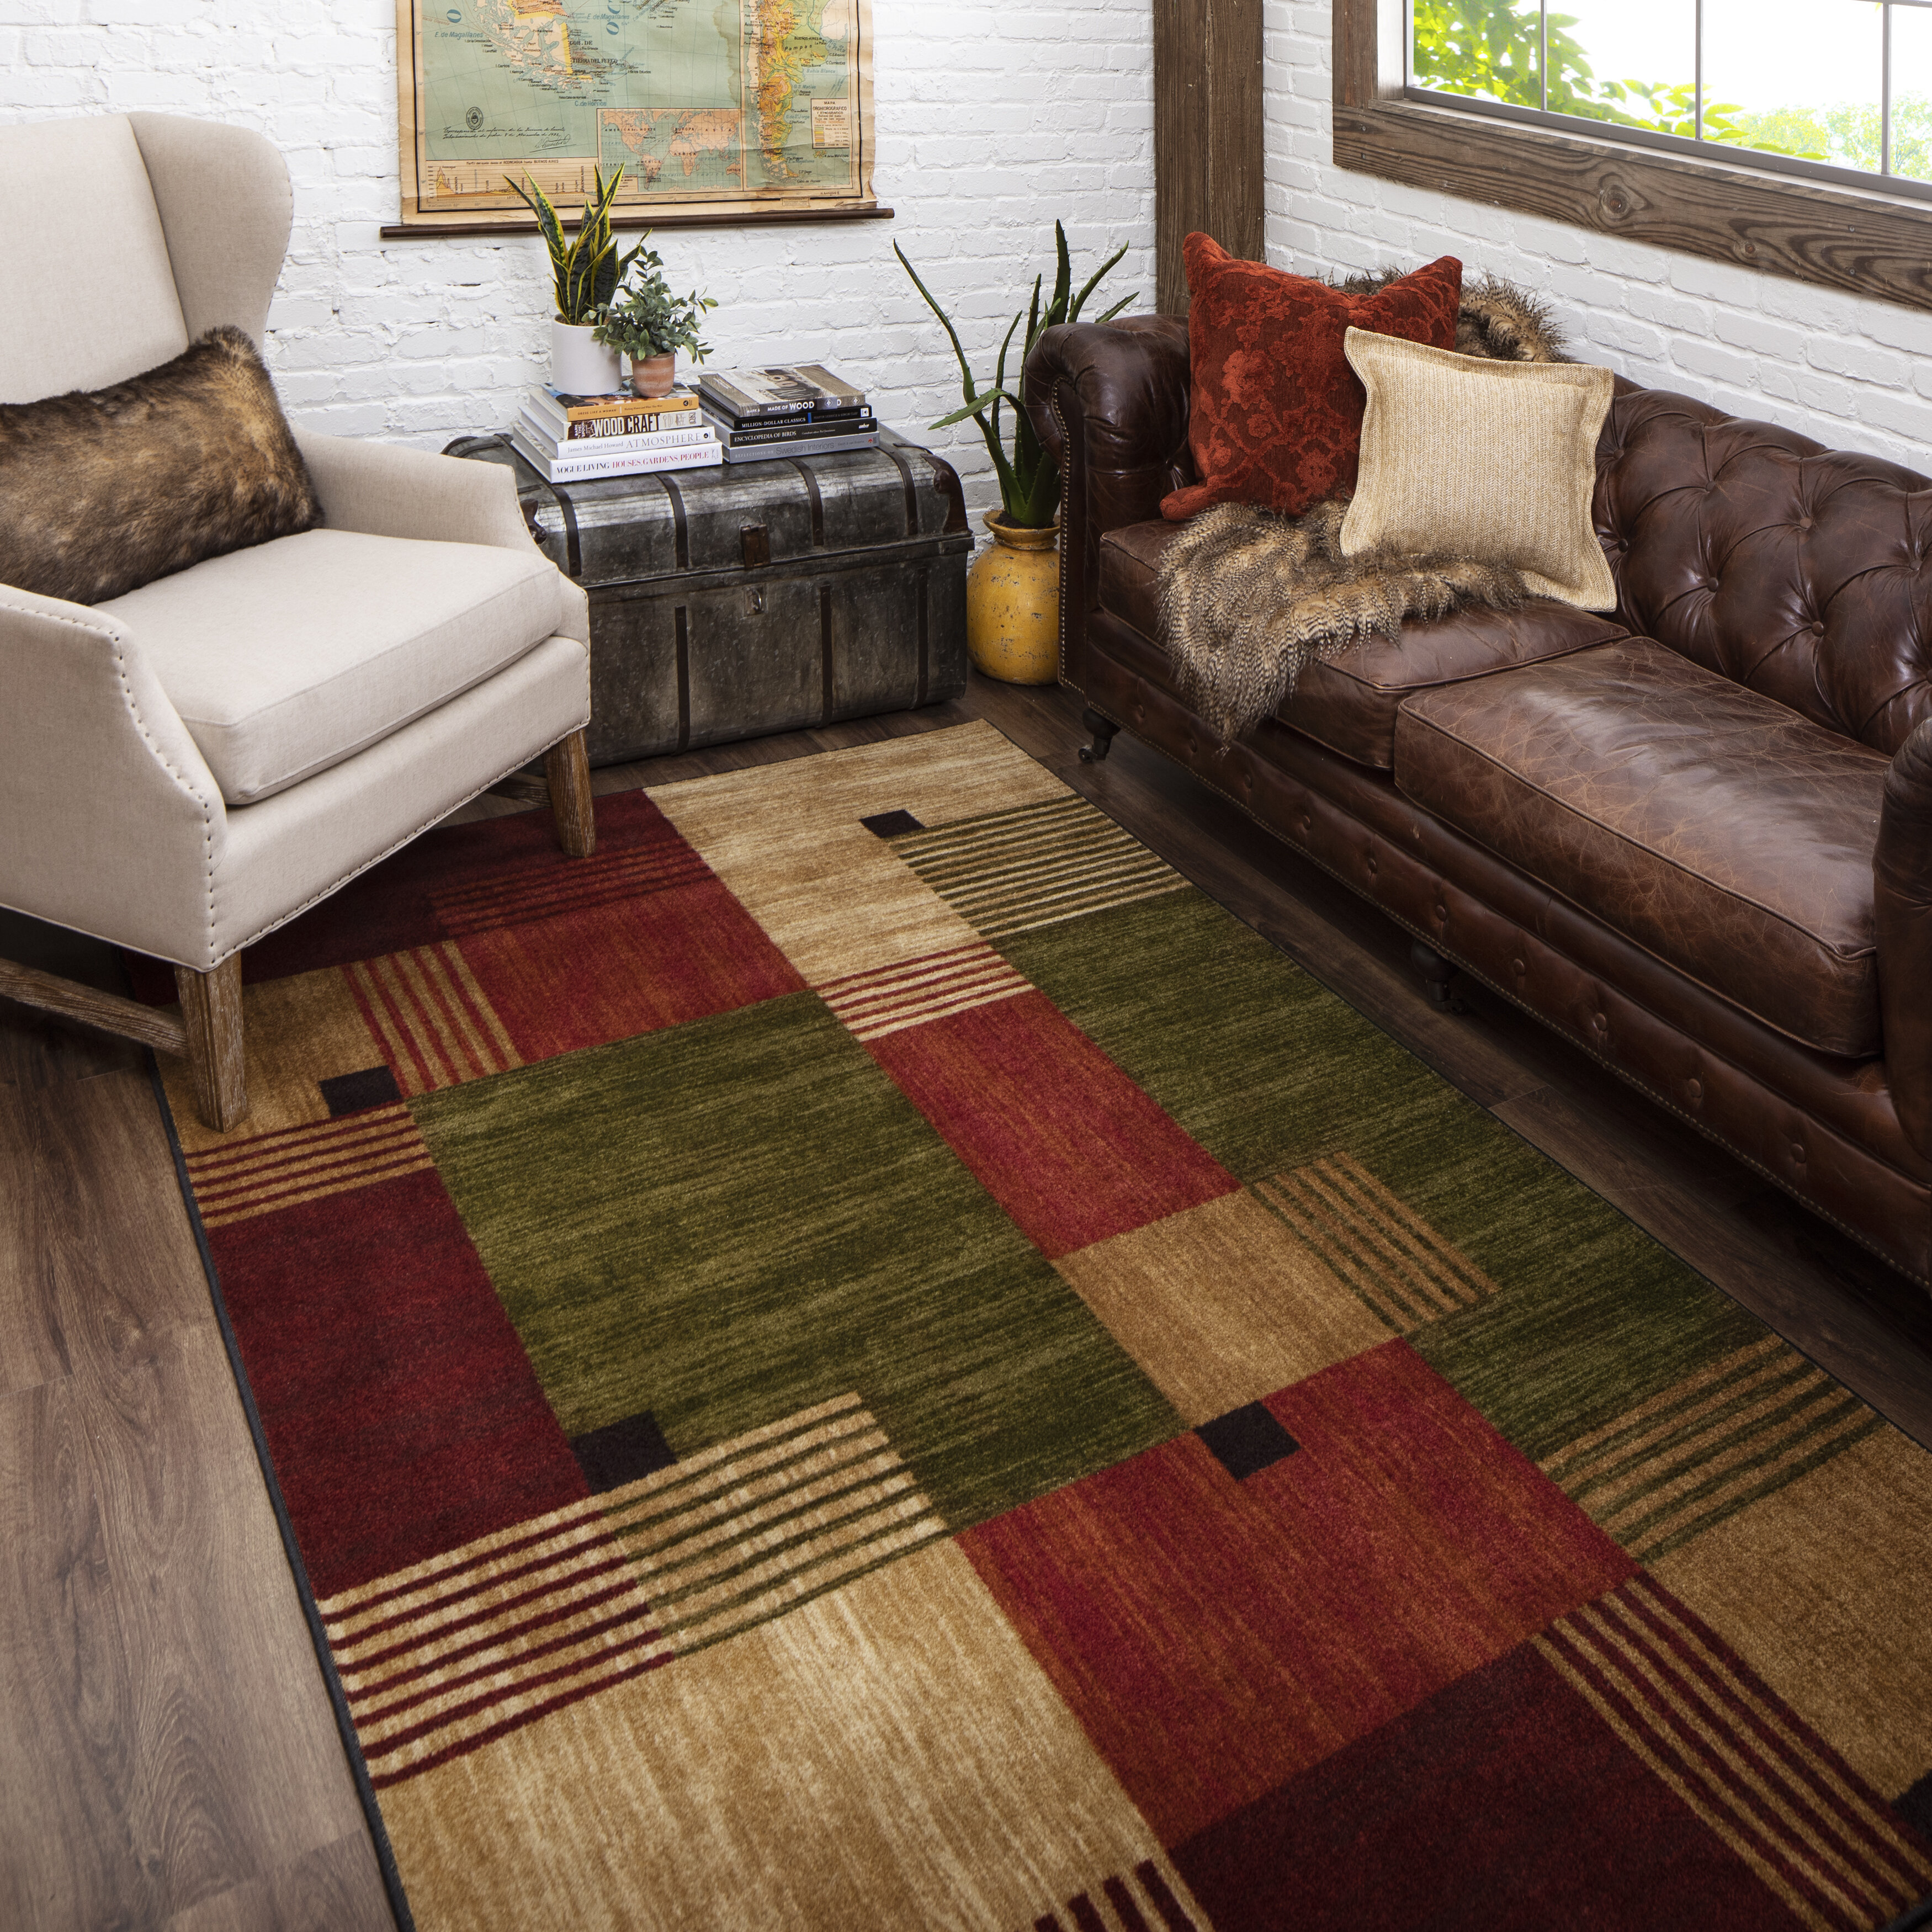 Let's Glow Crazy Round Floor Mat Area Rugs Bedroom Livingroom Non-Slip Carpets 